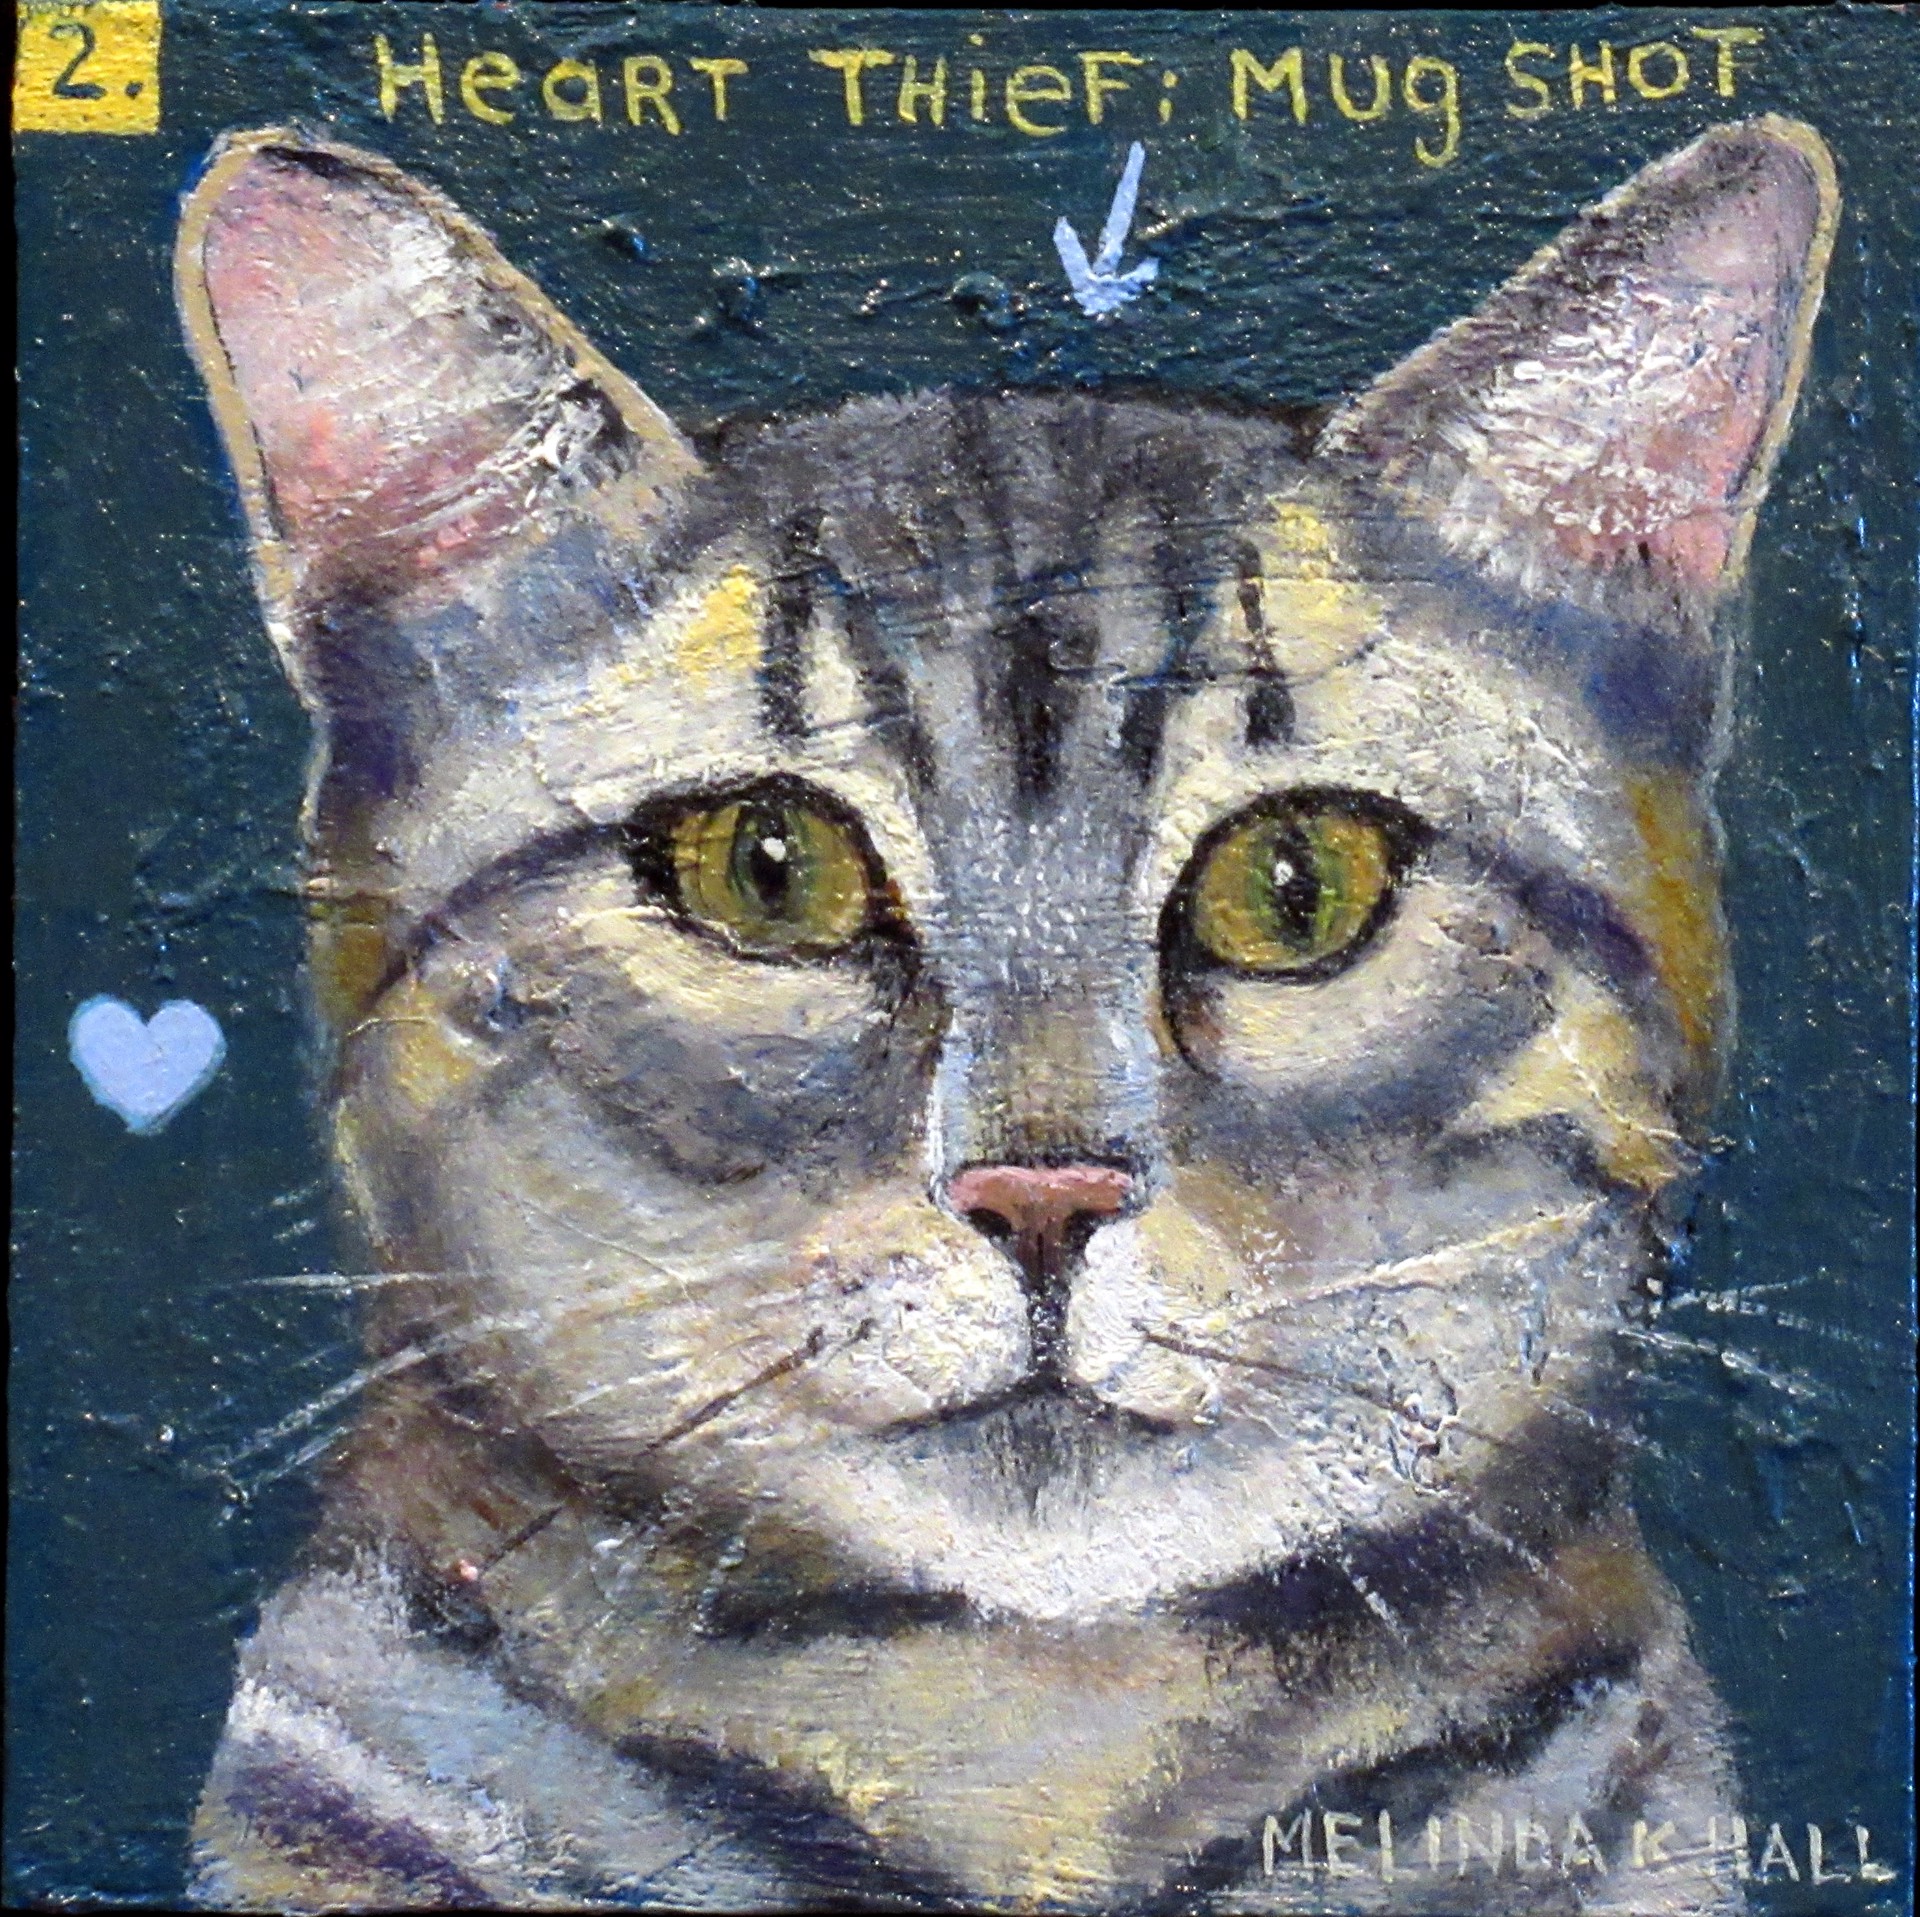 Heart Thief:  Mug Shot #2 by Melinda K. Hall